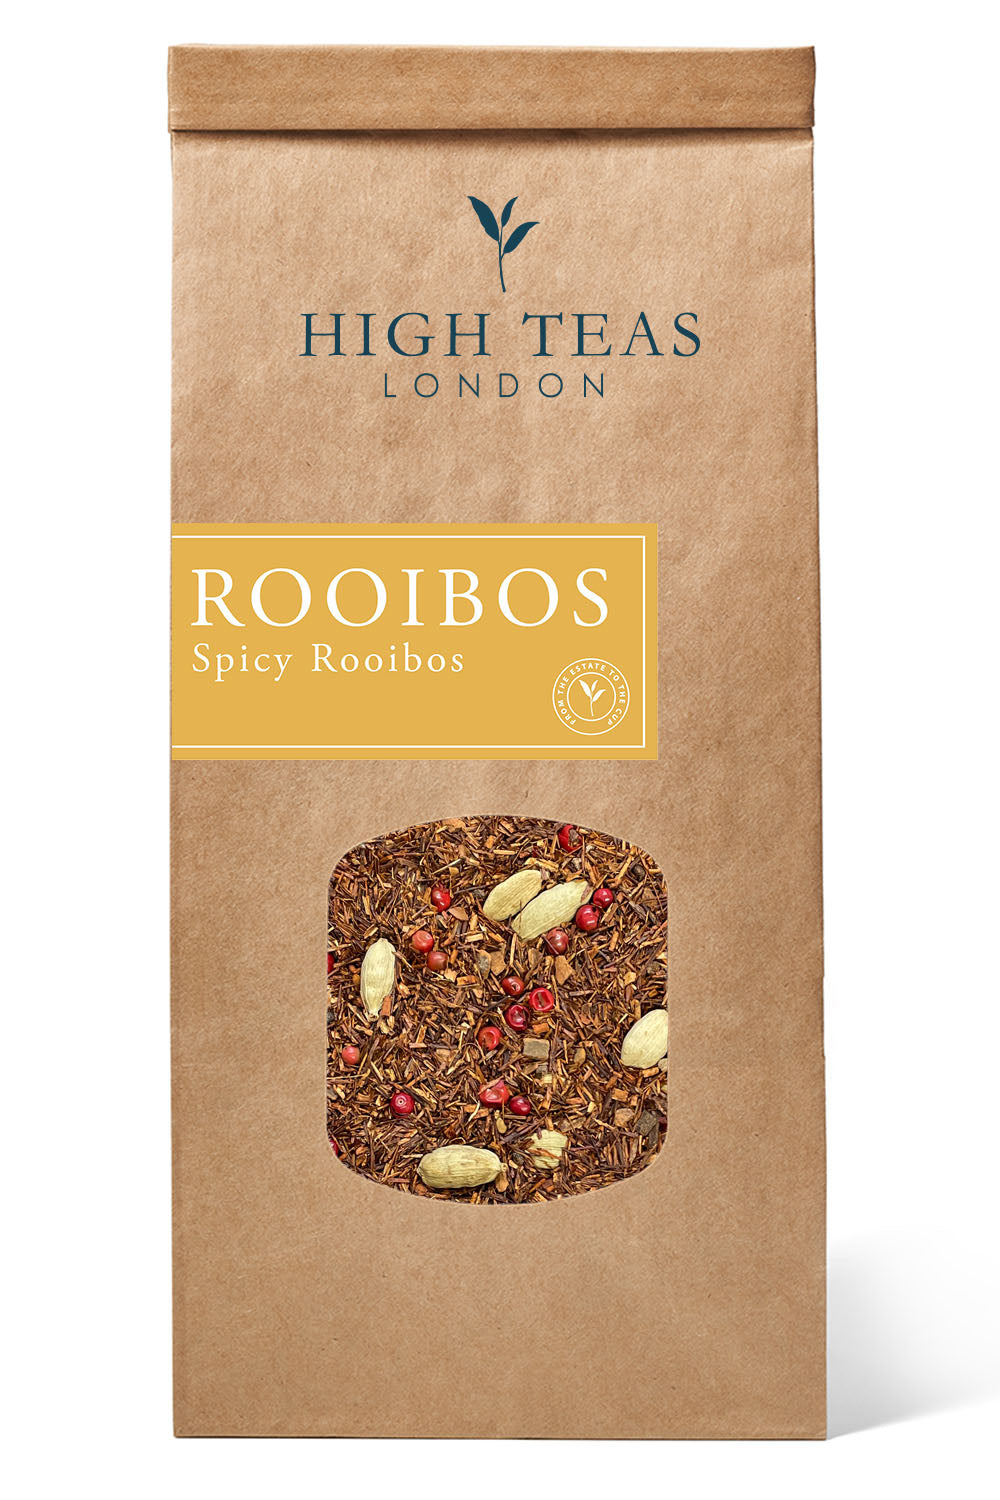 Spicy Rooibos-250g-Loose Leaf Tea-High Teas